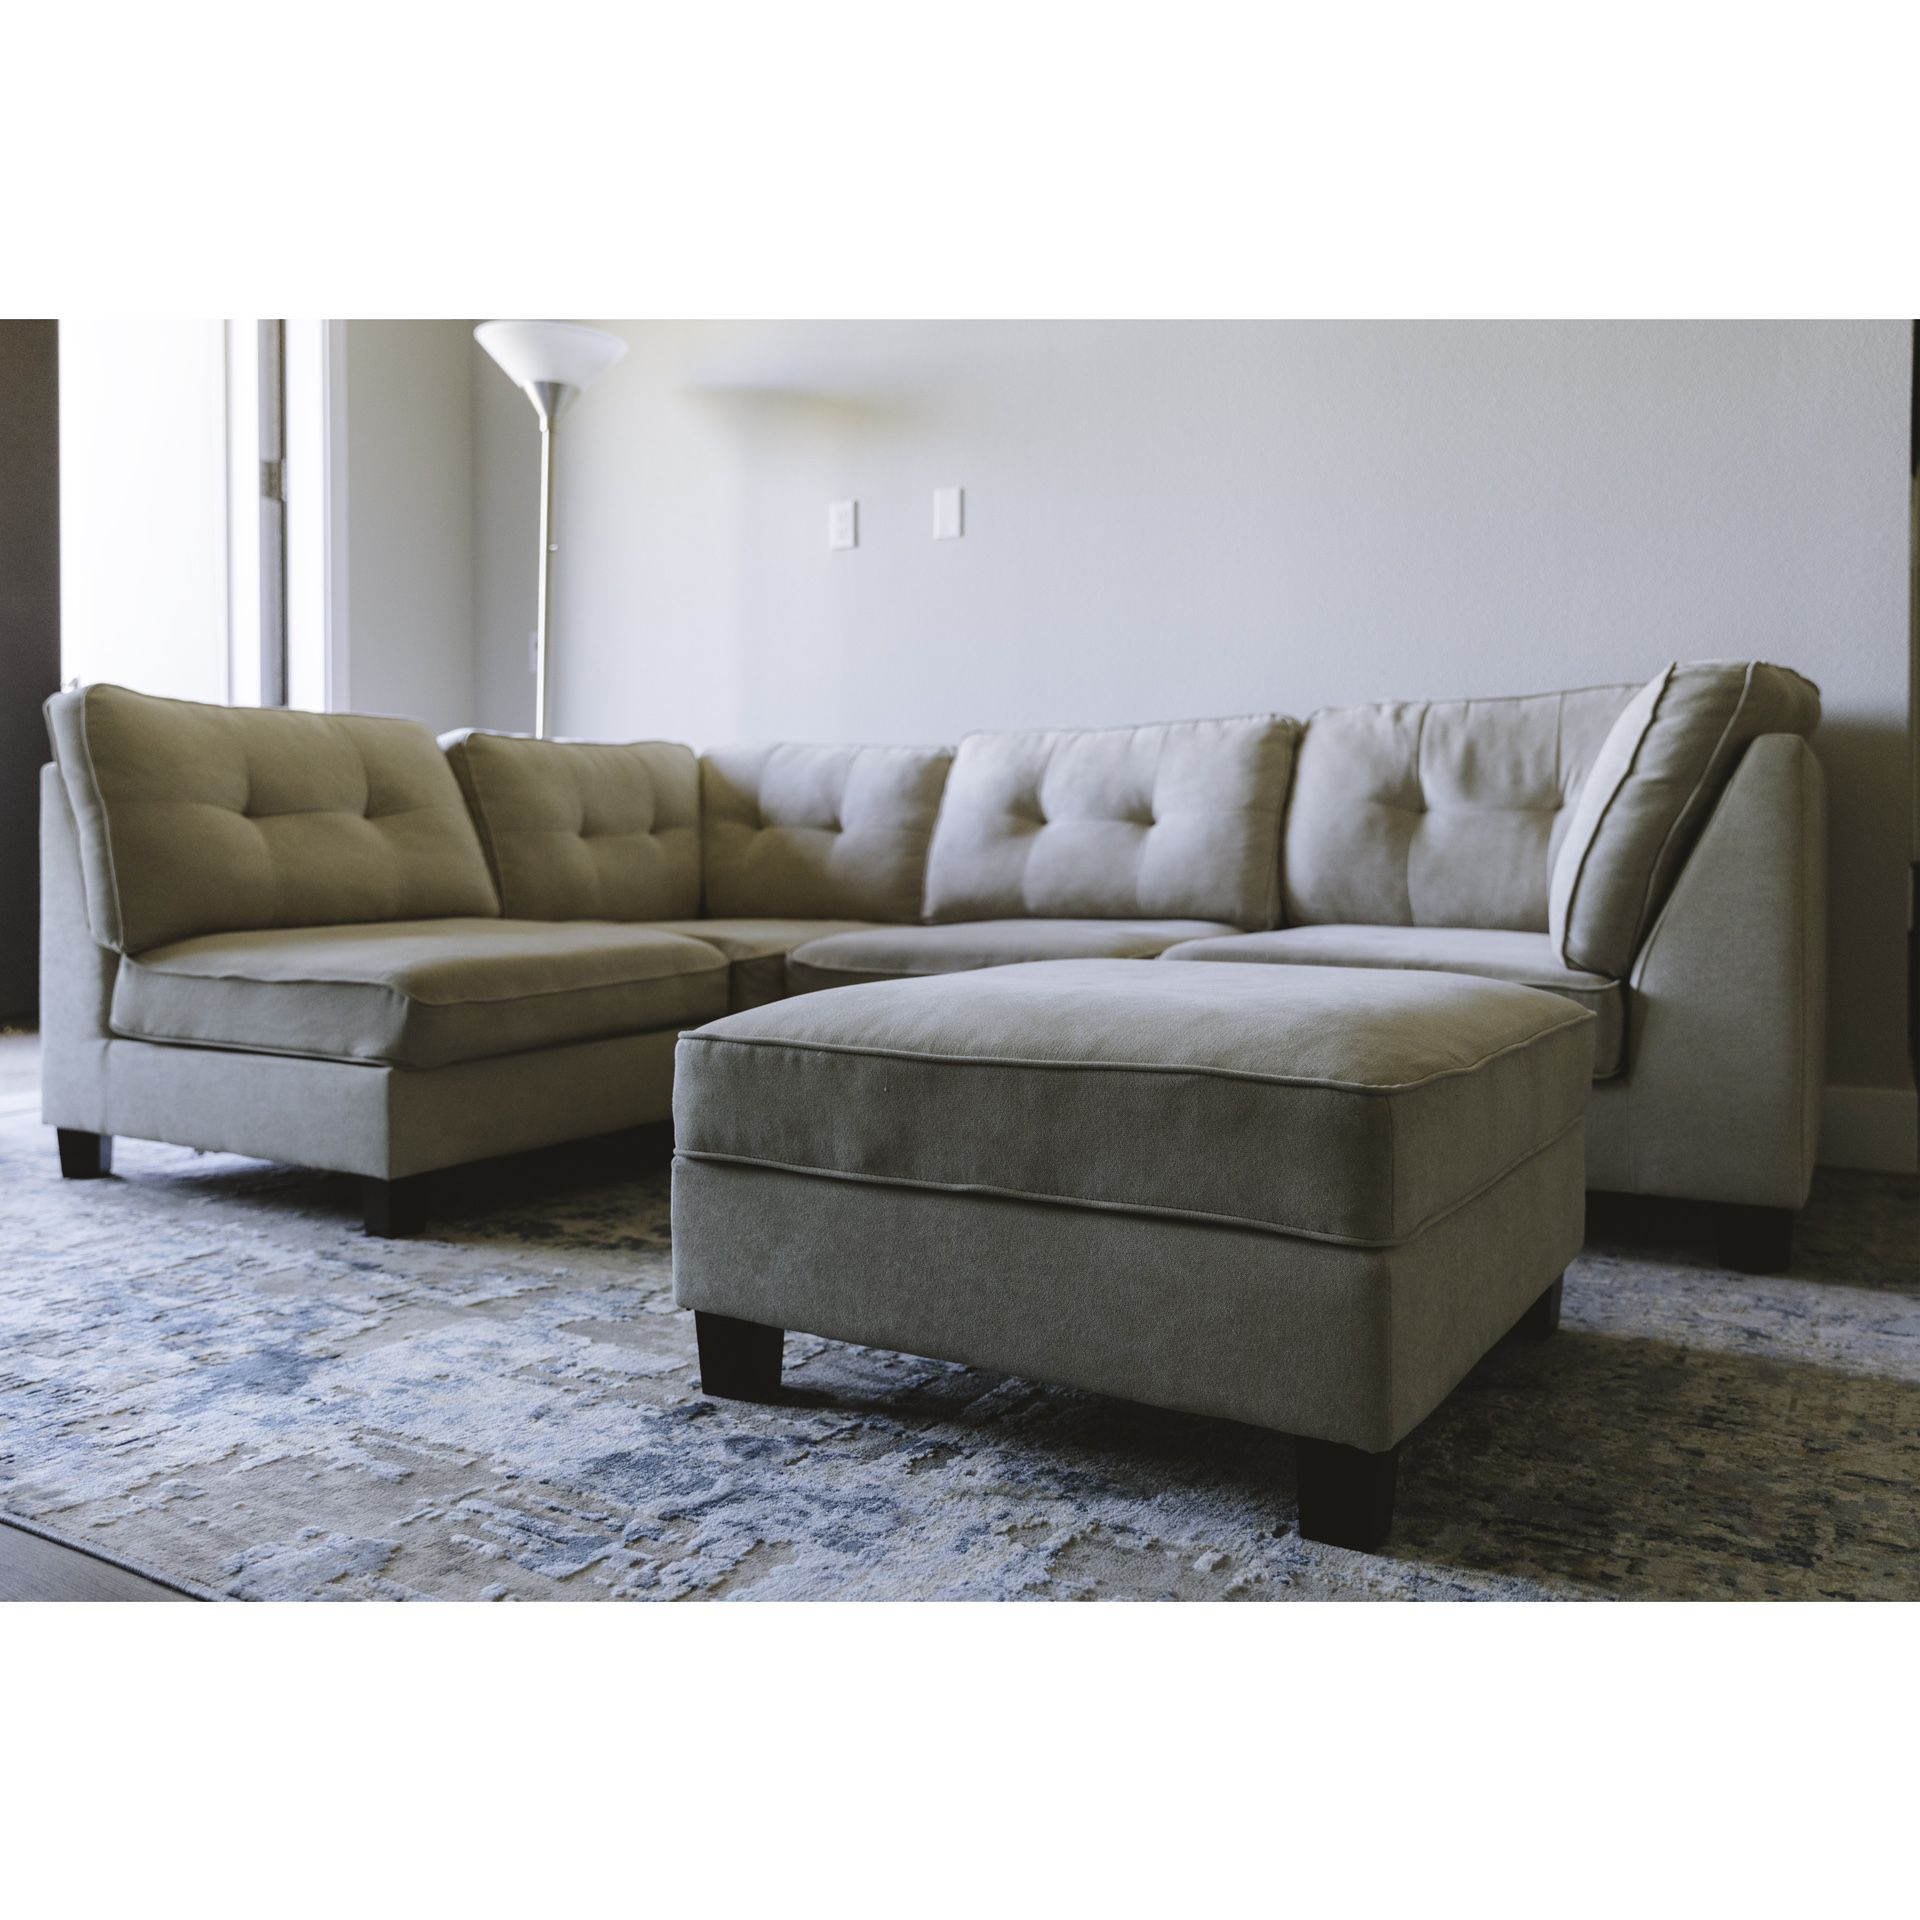 5 Piece Customizable Sectional Sofa With Ottoman 